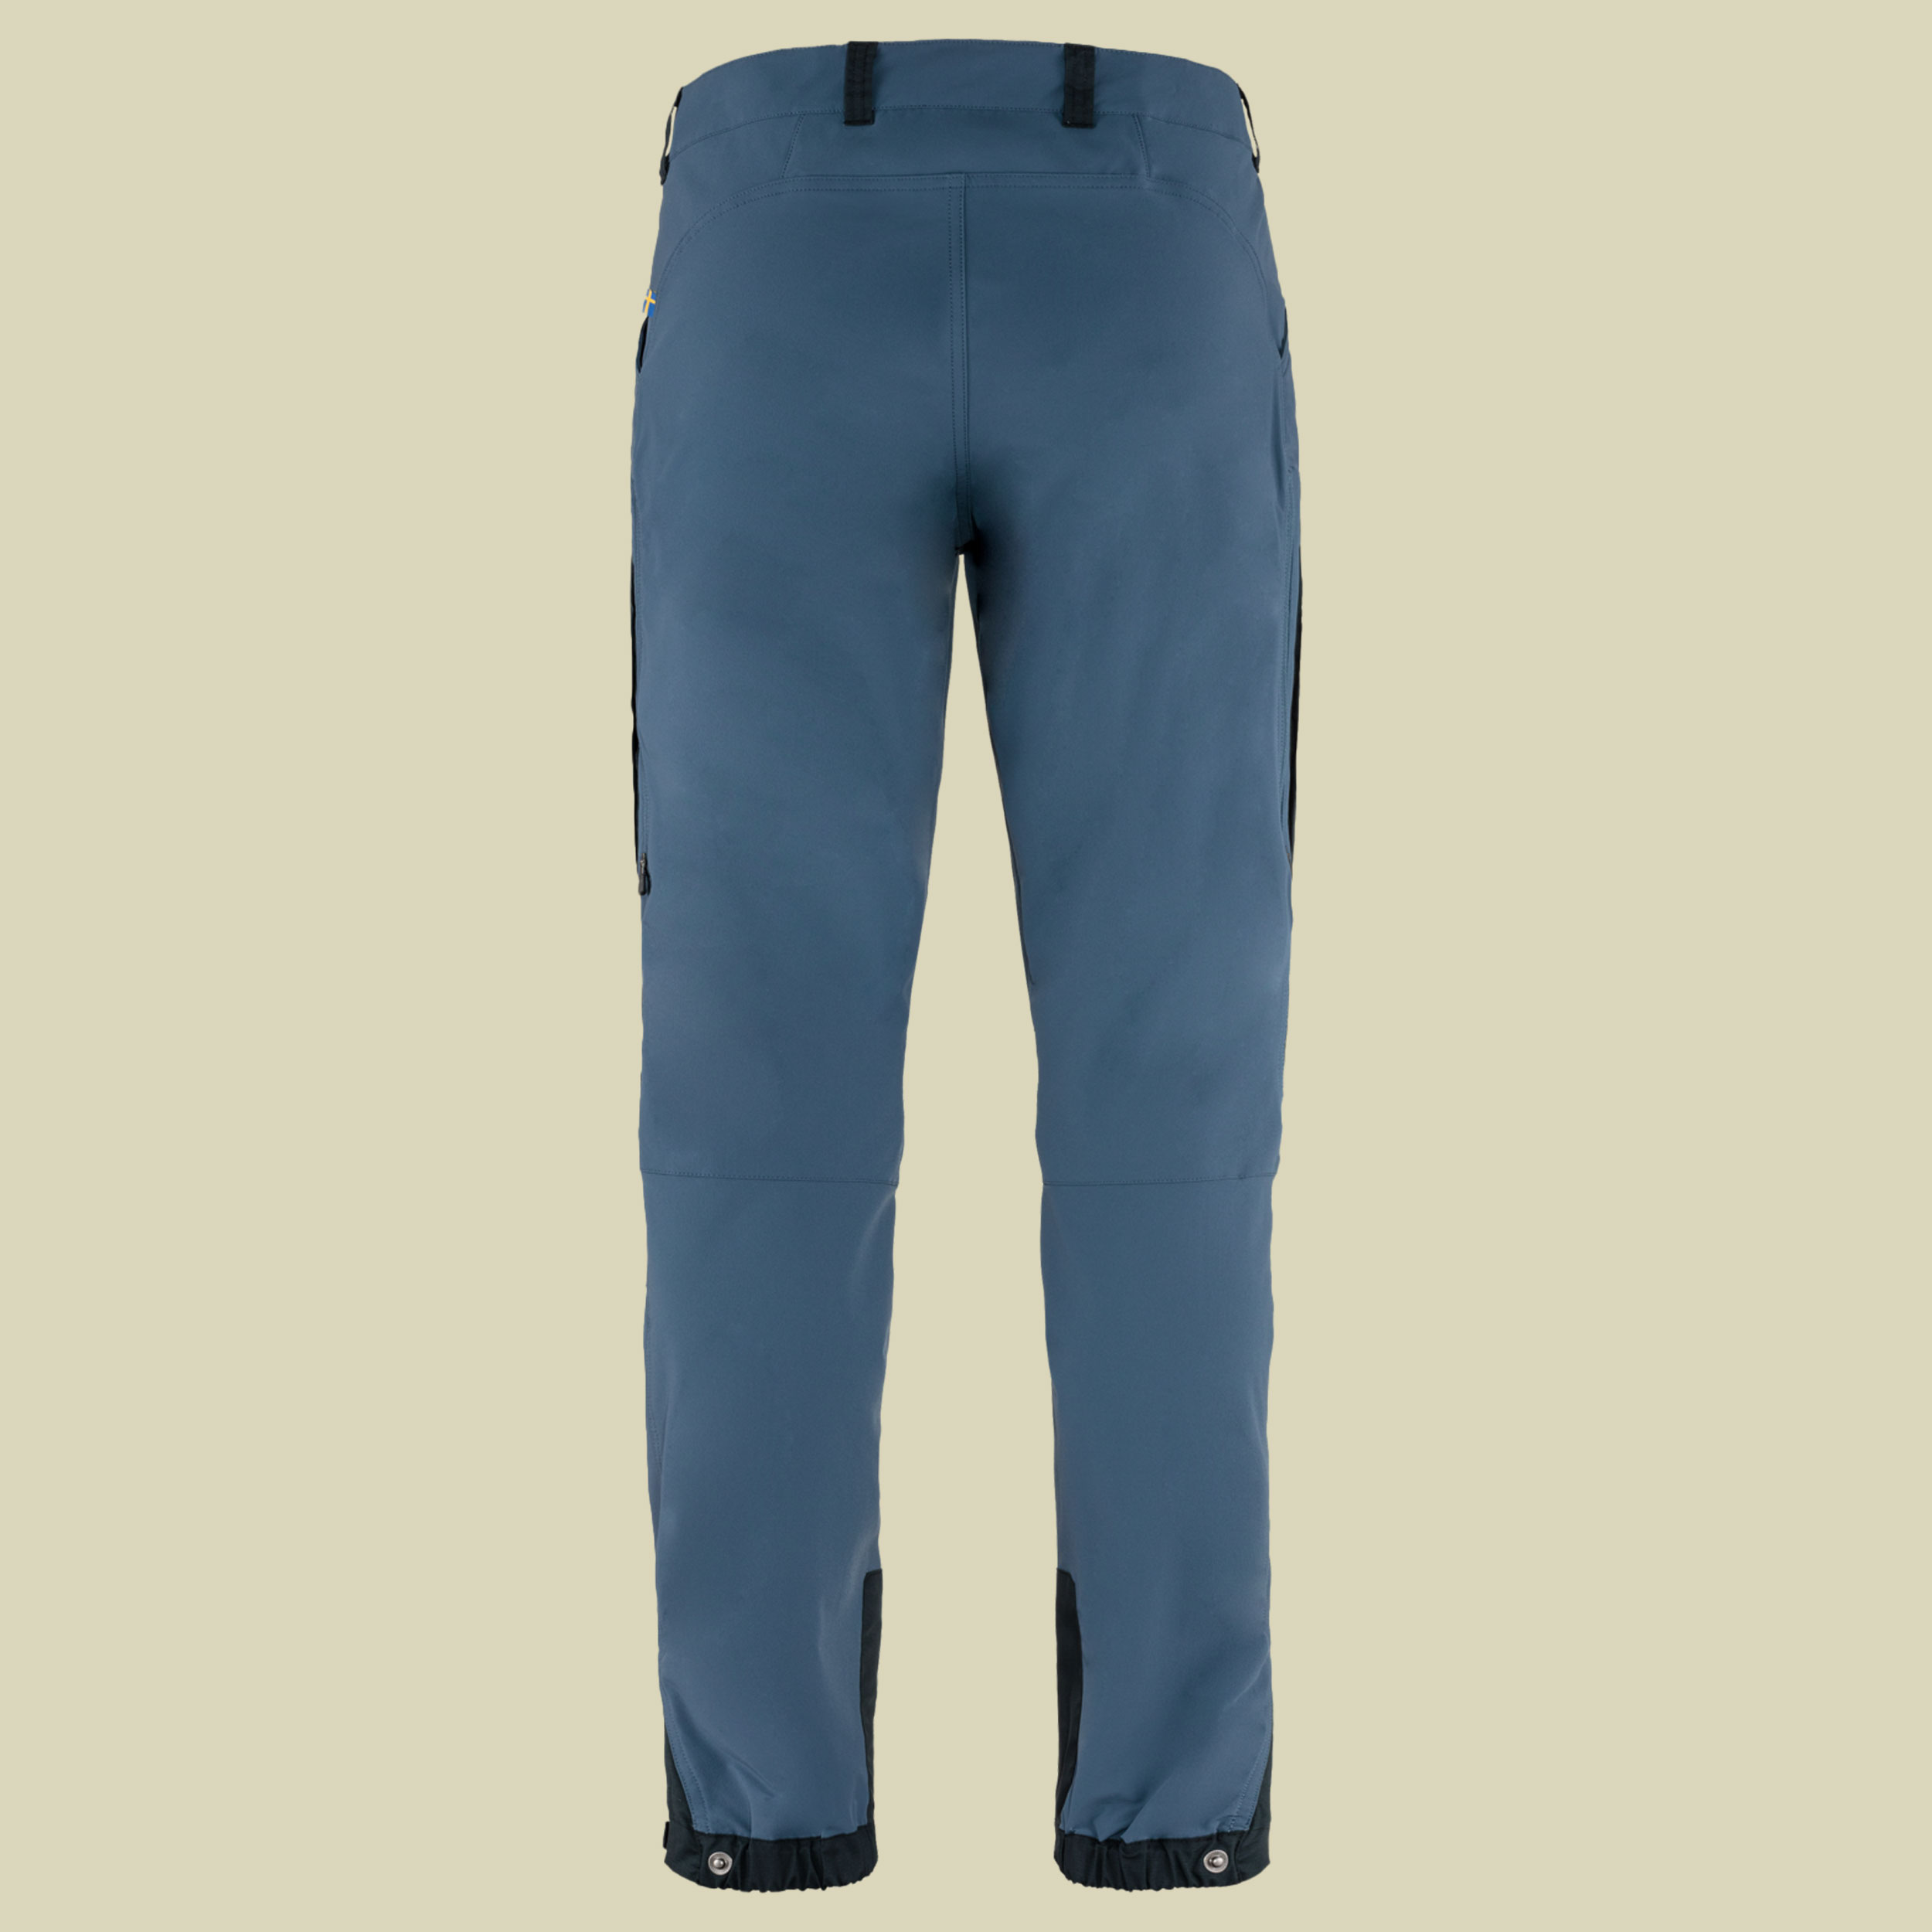 Keb Agile Trousers Men Größe 48 Farbe indigo blue-dark navy